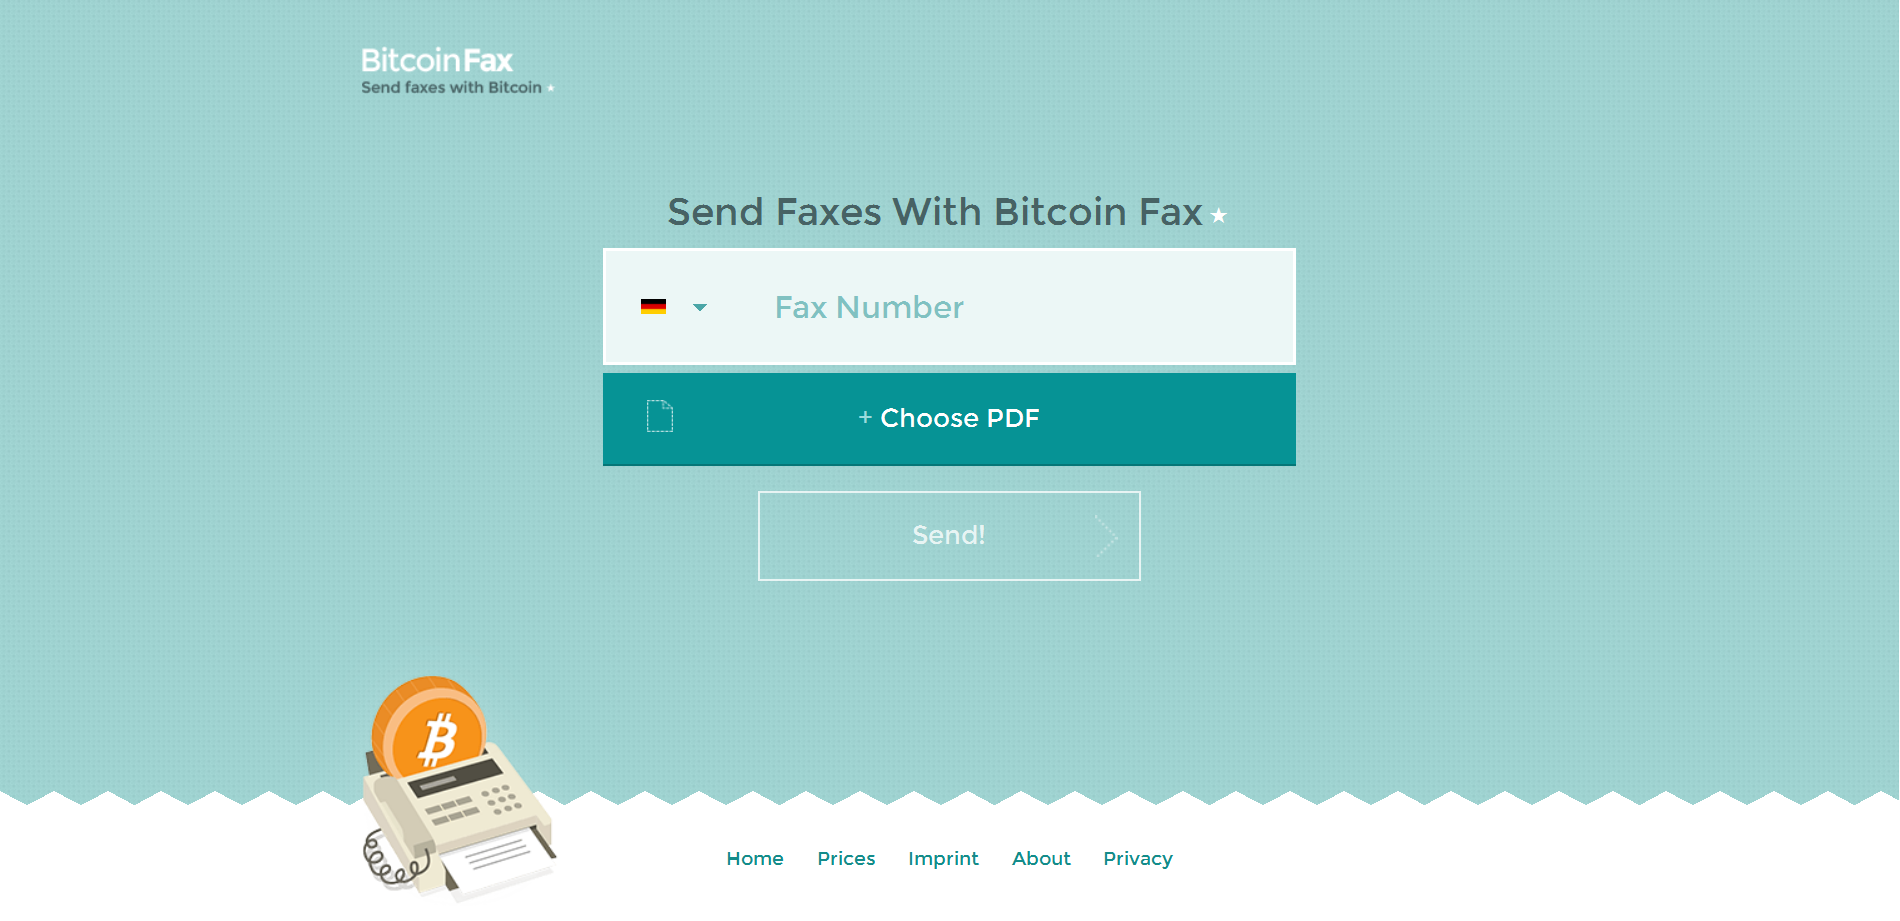 Bitcoinfax